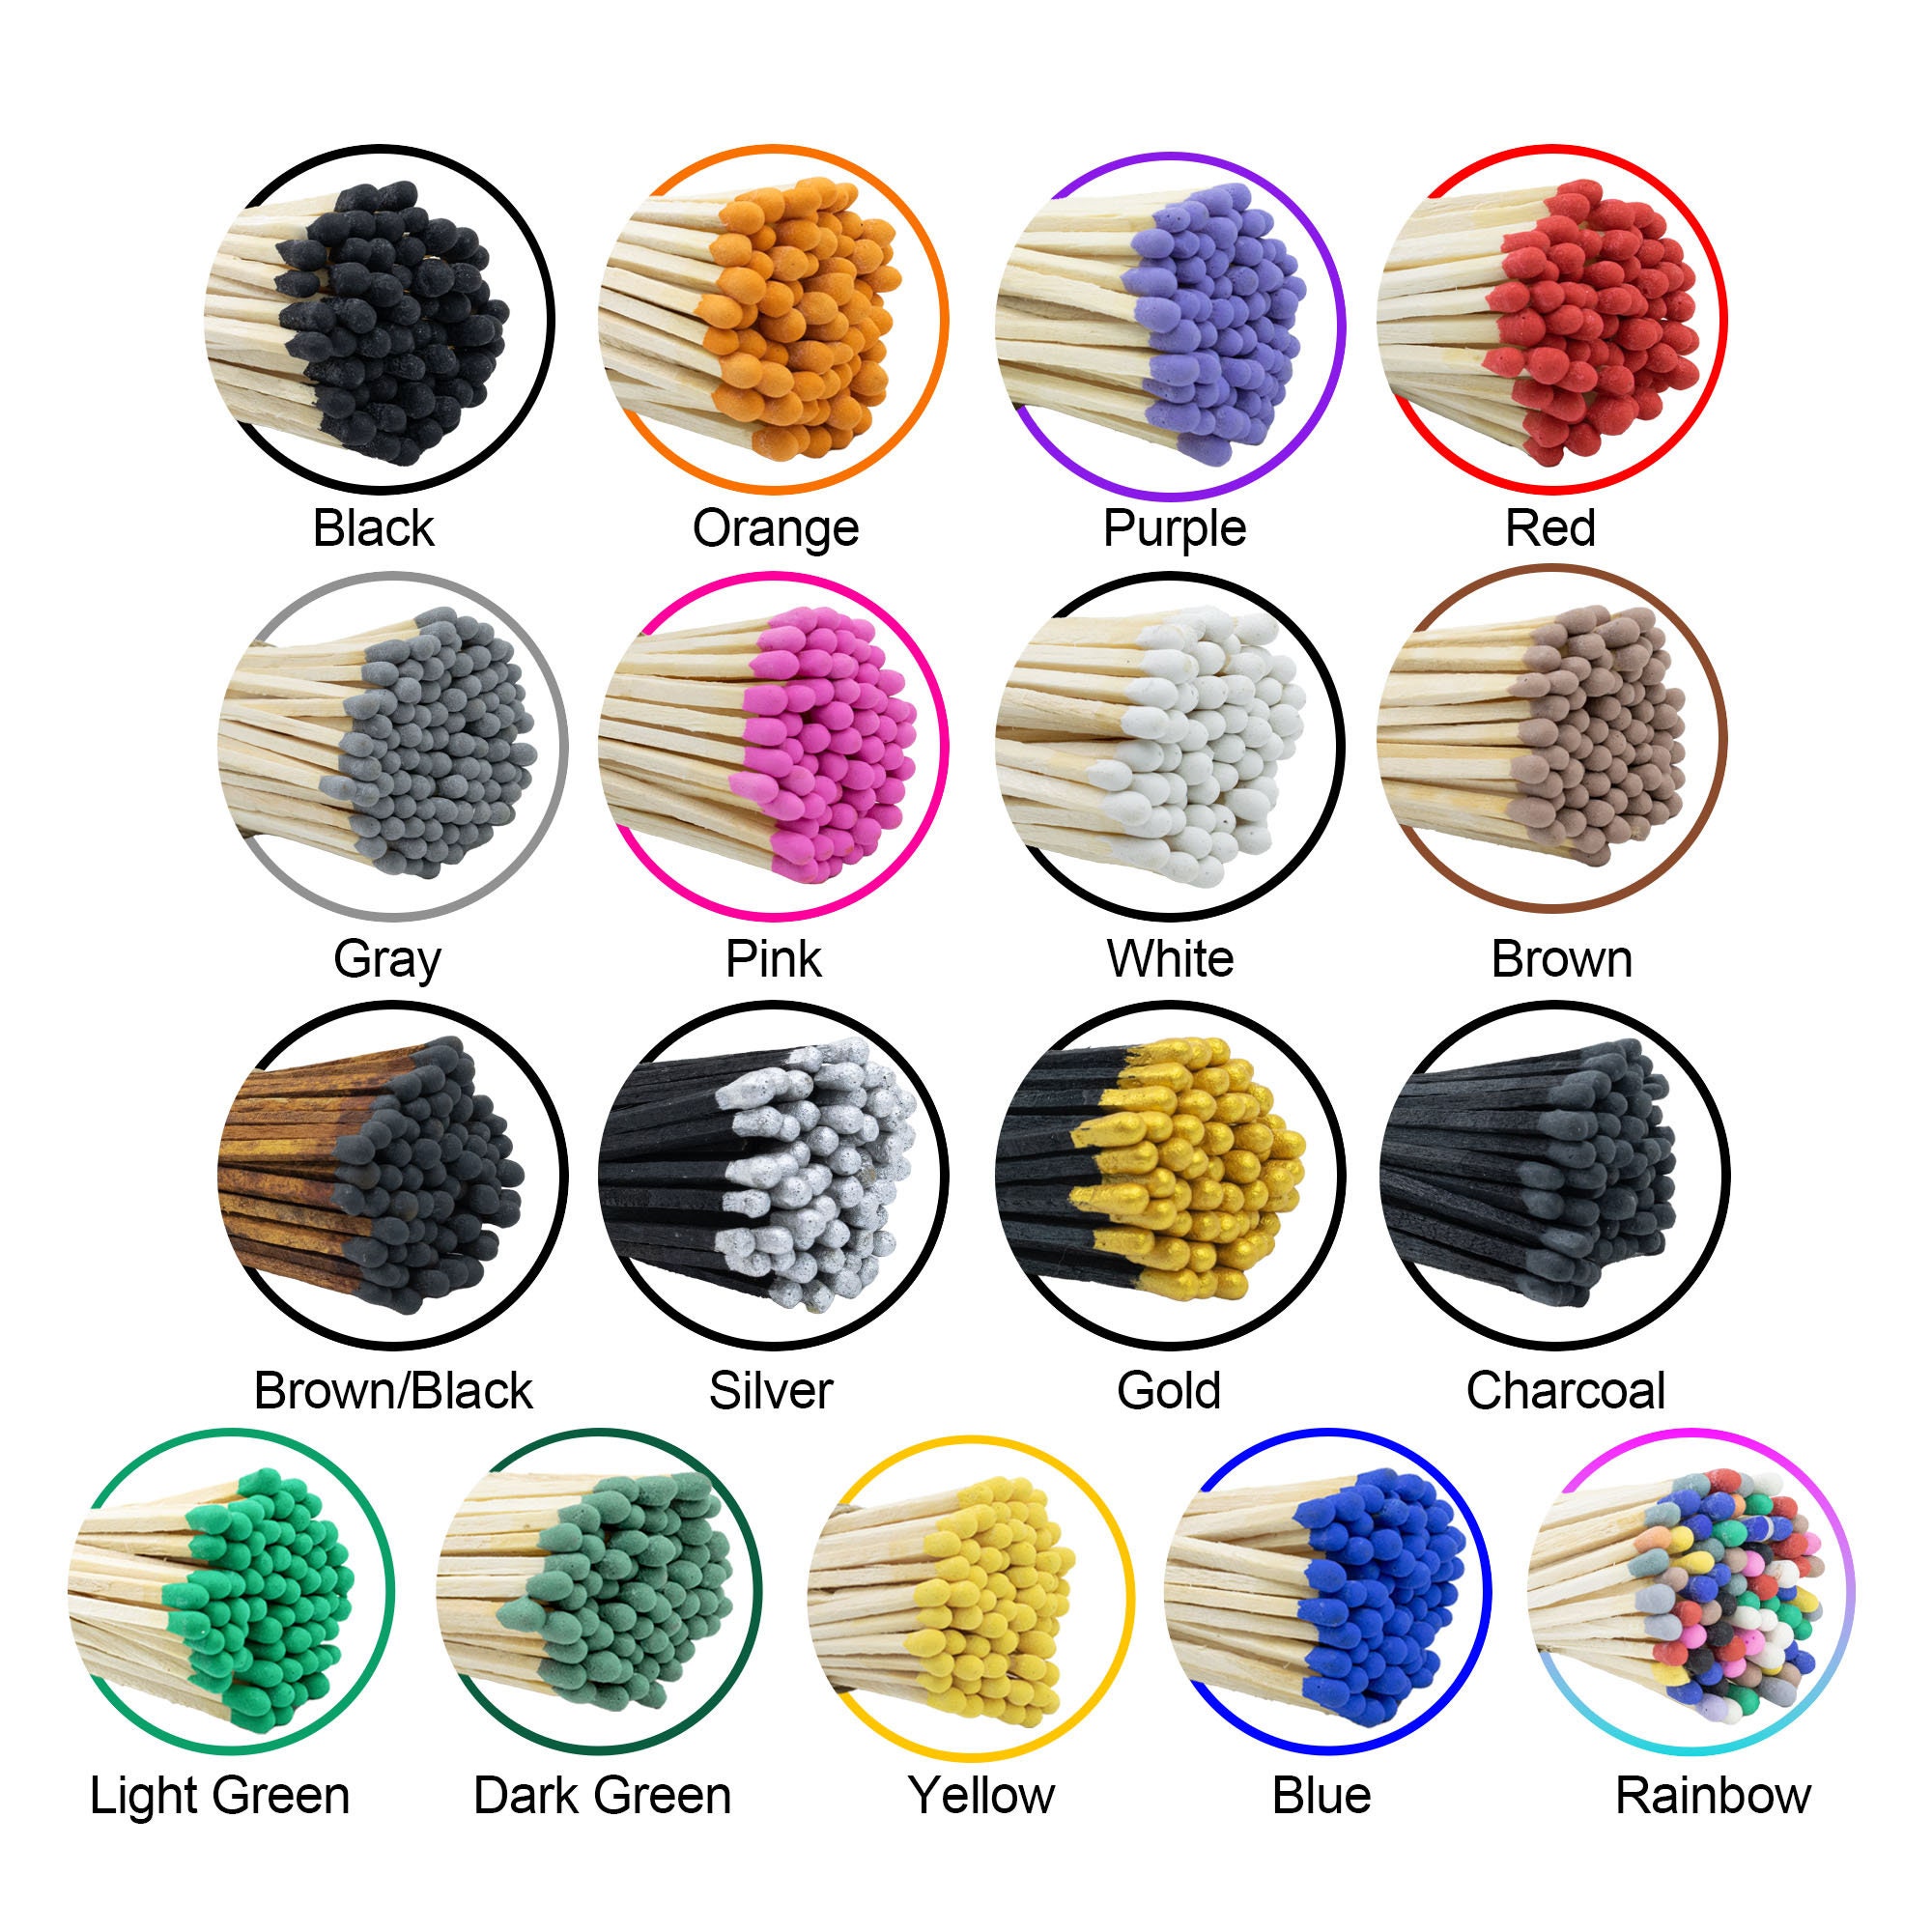 Set of 40 Artisan Matchsticks 2 Colored Safety Matches 